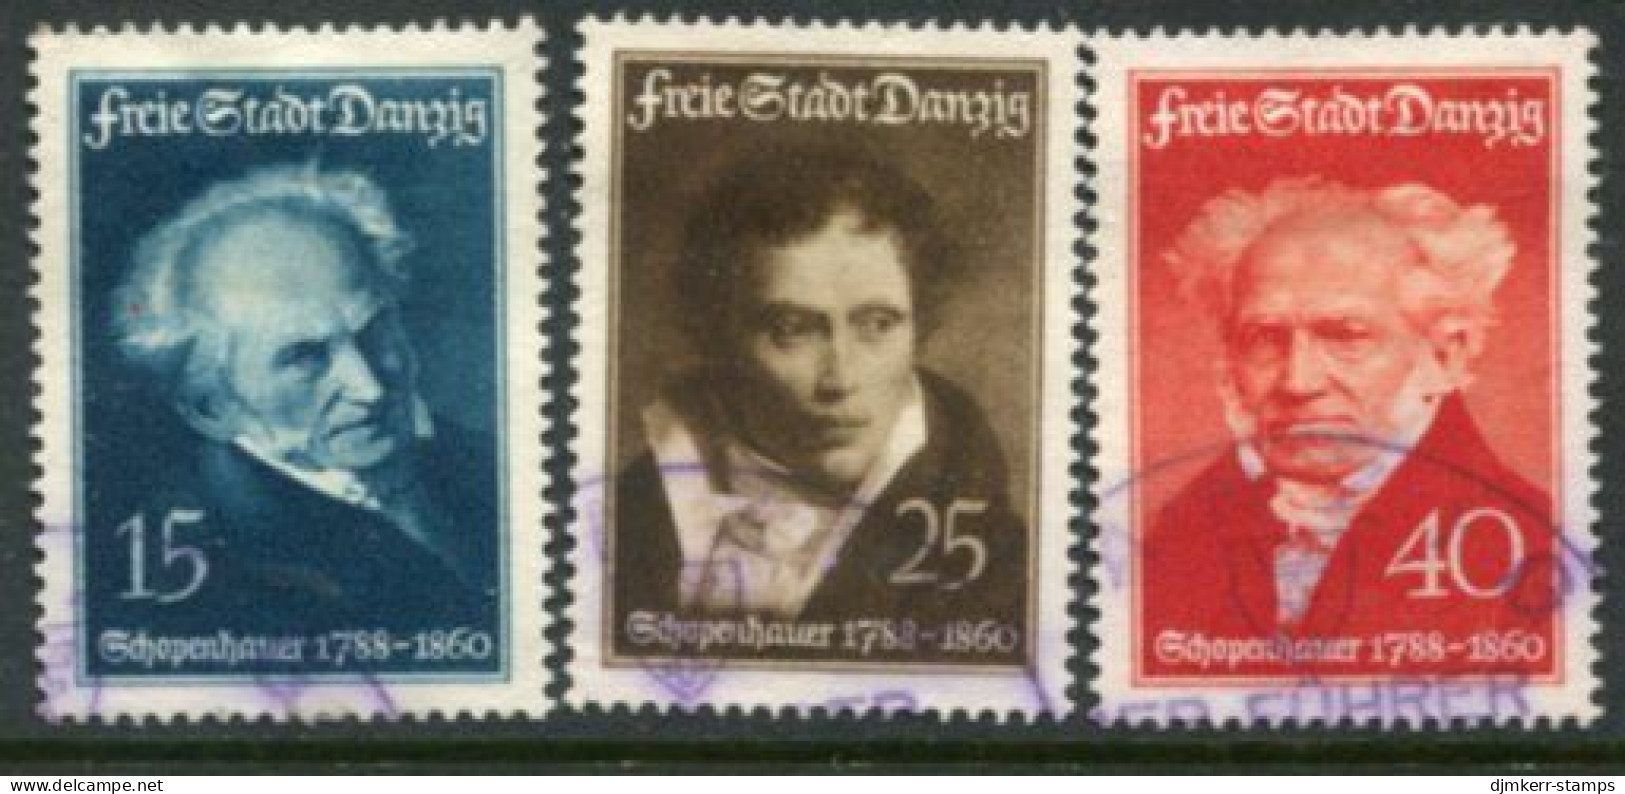 DANZIG 1938 Schopenhauer Birth Anniversary Used  Michel 281-83 - Used